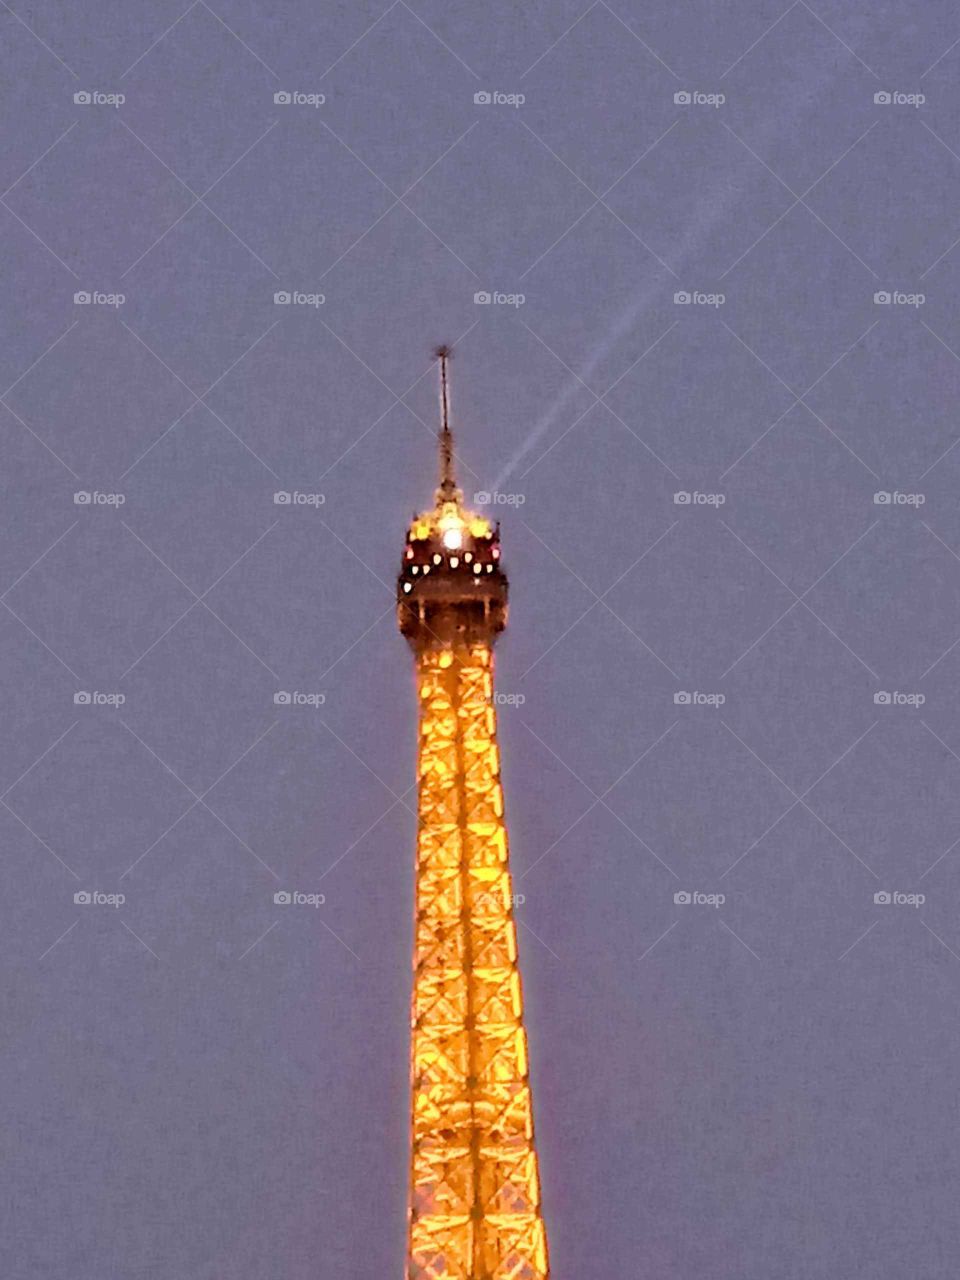 Eiffel's lights